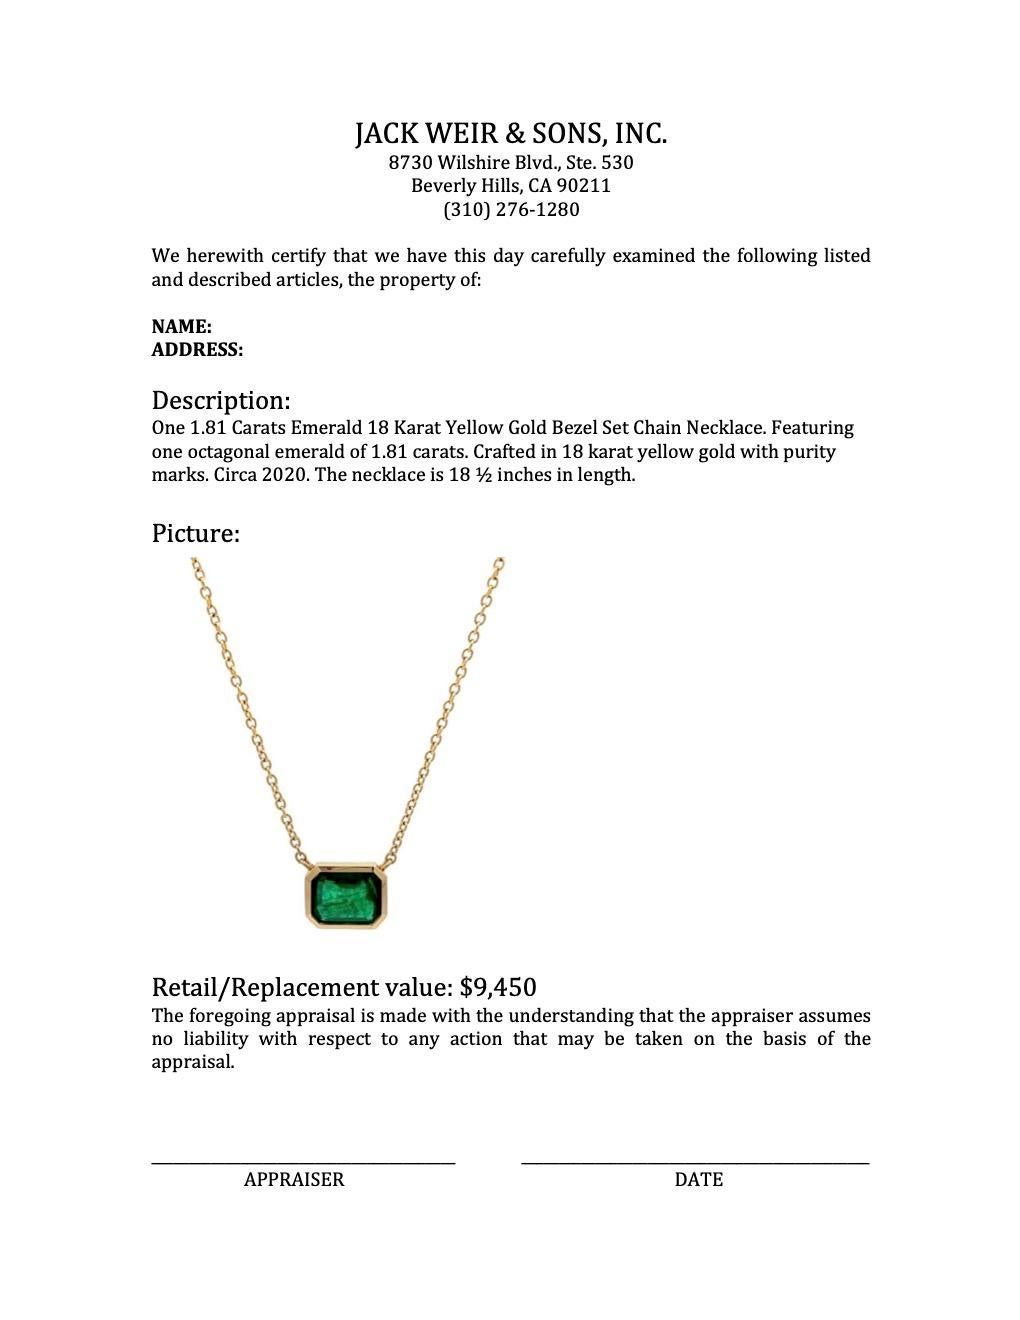 1.81 Carats Emerald 18 Karat Yellow Gold Bezel Set Chain Necklace 2